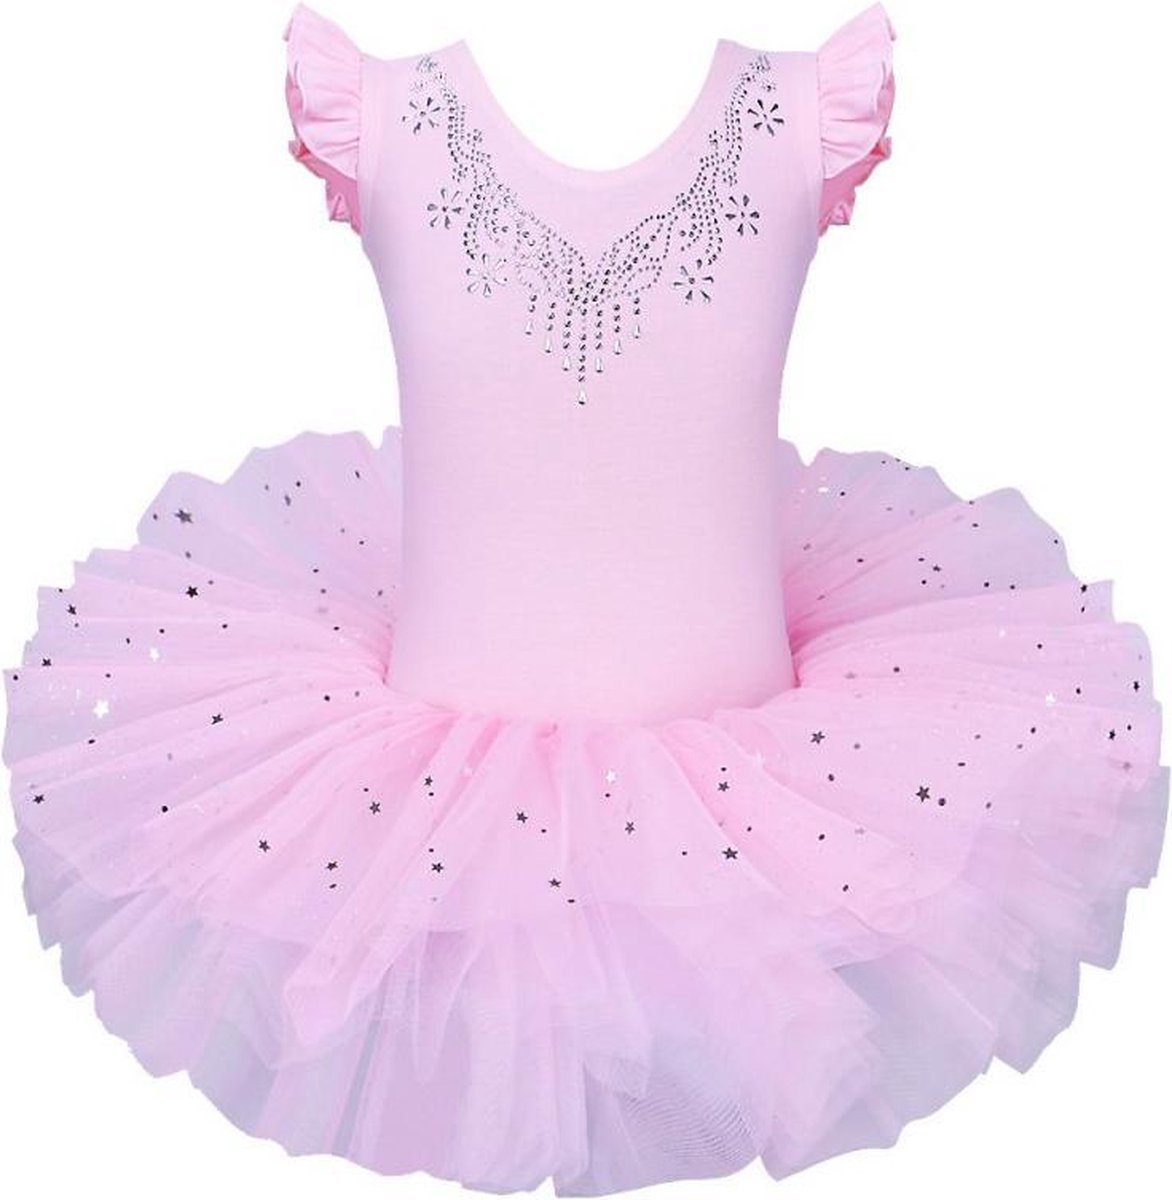 Balletpakje met Tutu Roze Sparkle Style - Ballet - prinsessen tutu verkleed jurk meisje EAN 6013722660609 122-128